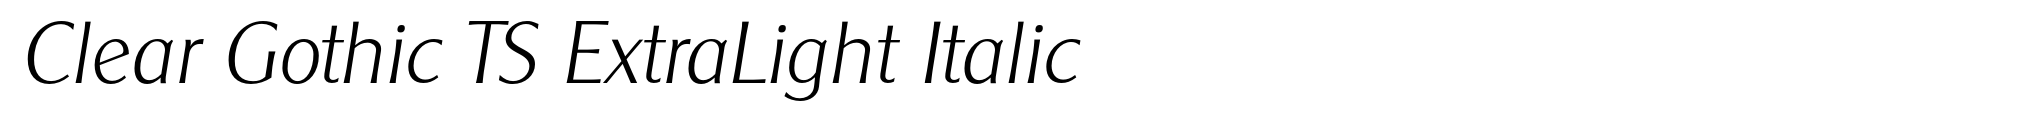 Clear Gothic TS ExtraLight Italic image